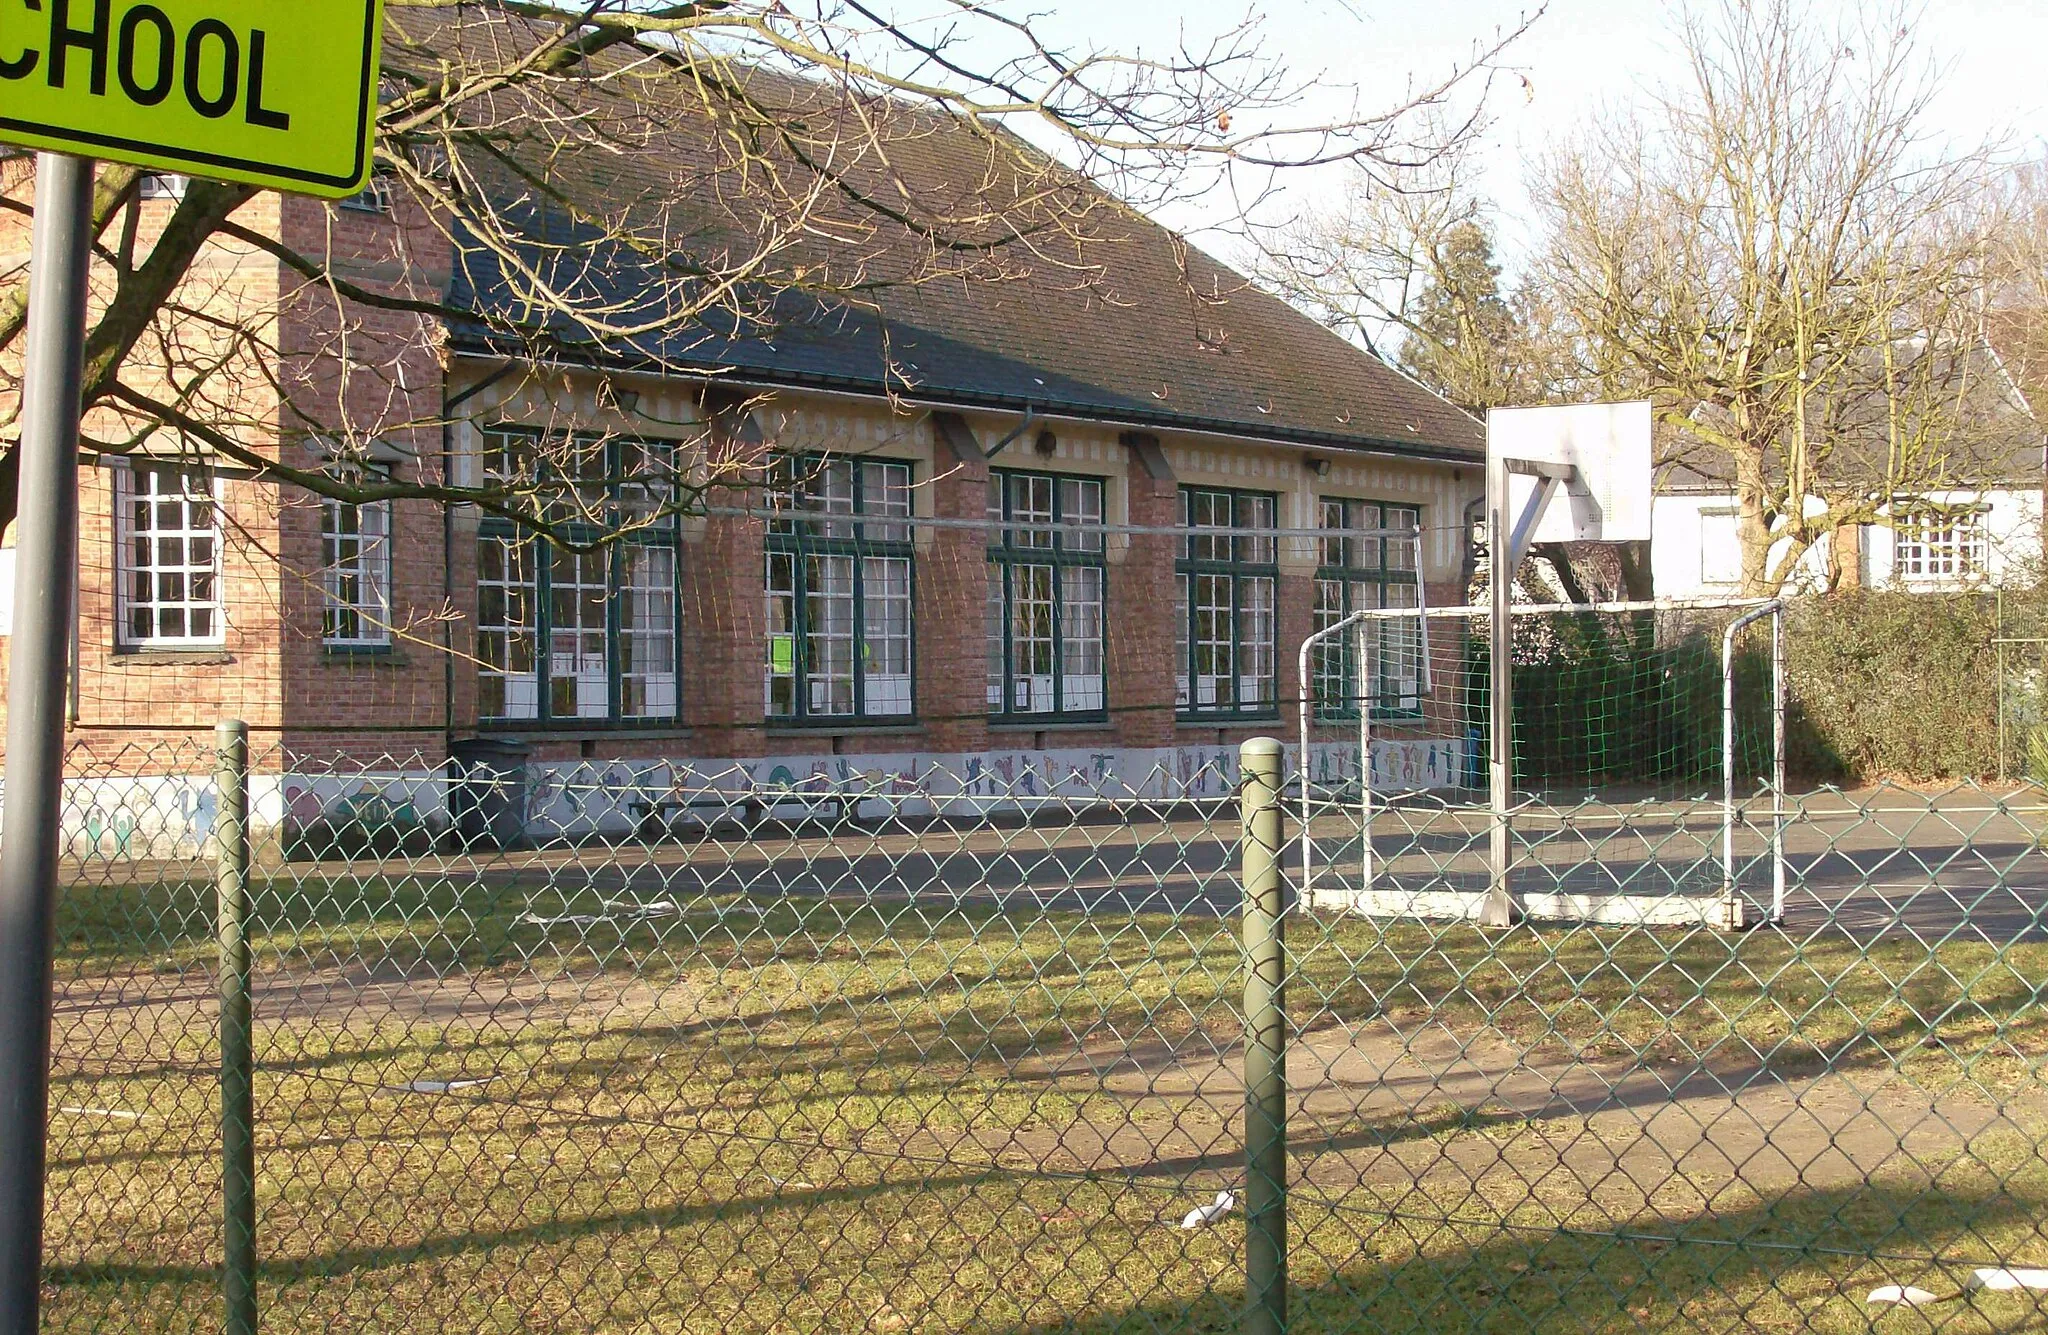 Photo showing: School near Oudenbos, Lokeren, Belgium